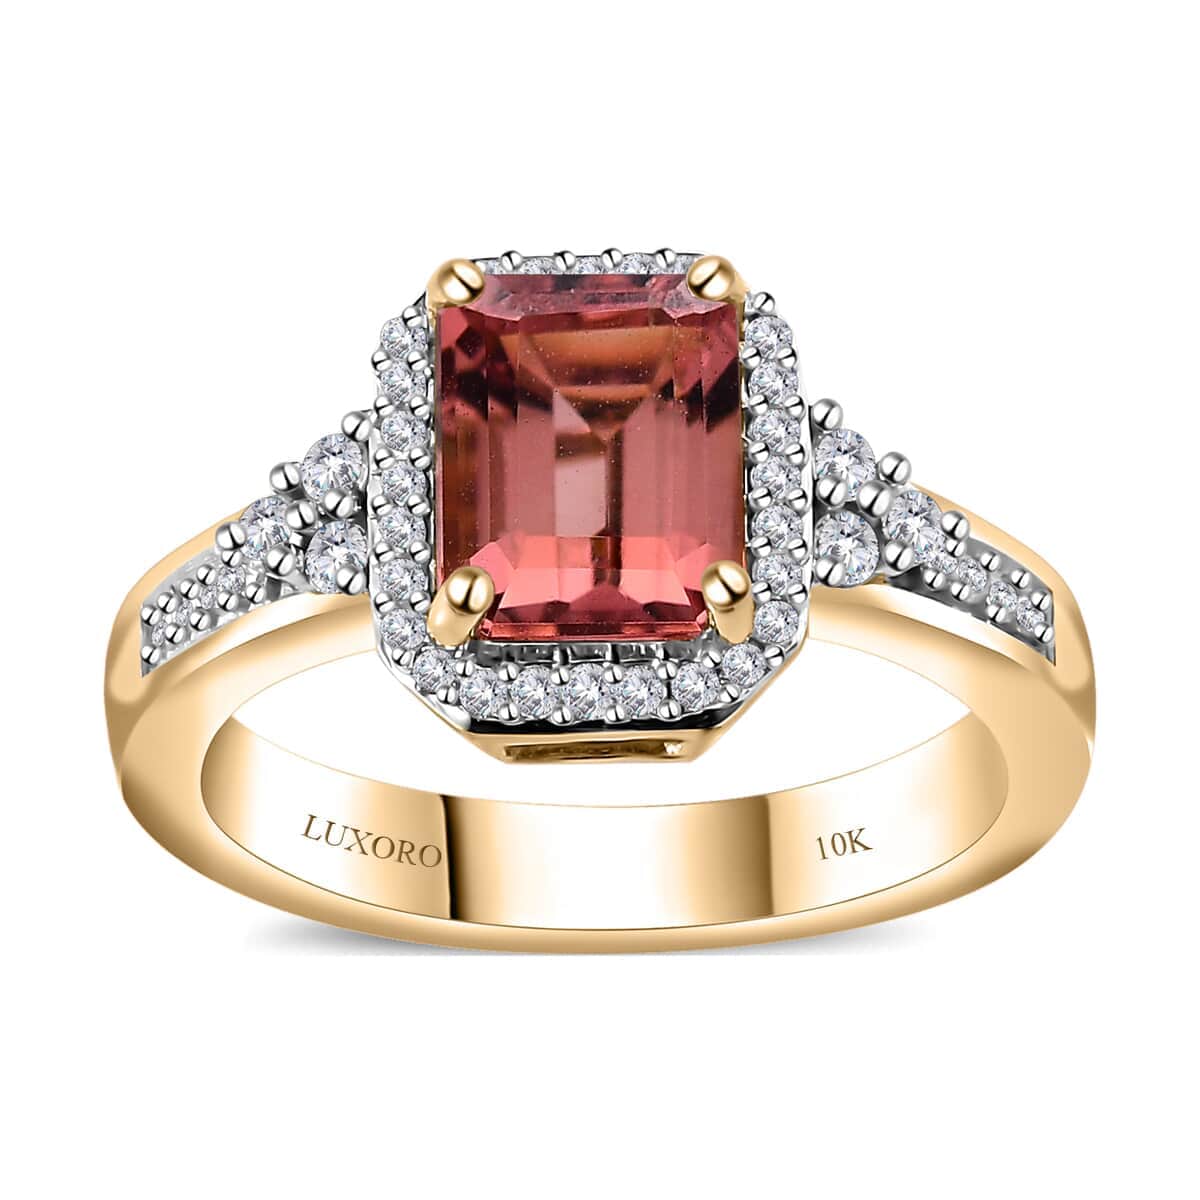 Luxoro 10K Rose Gold Premium Blush Tourmaline and G-H I2 Diamond Halo Ring (Size 8.5) 4.75 Grams 2.10 ctw image number 0